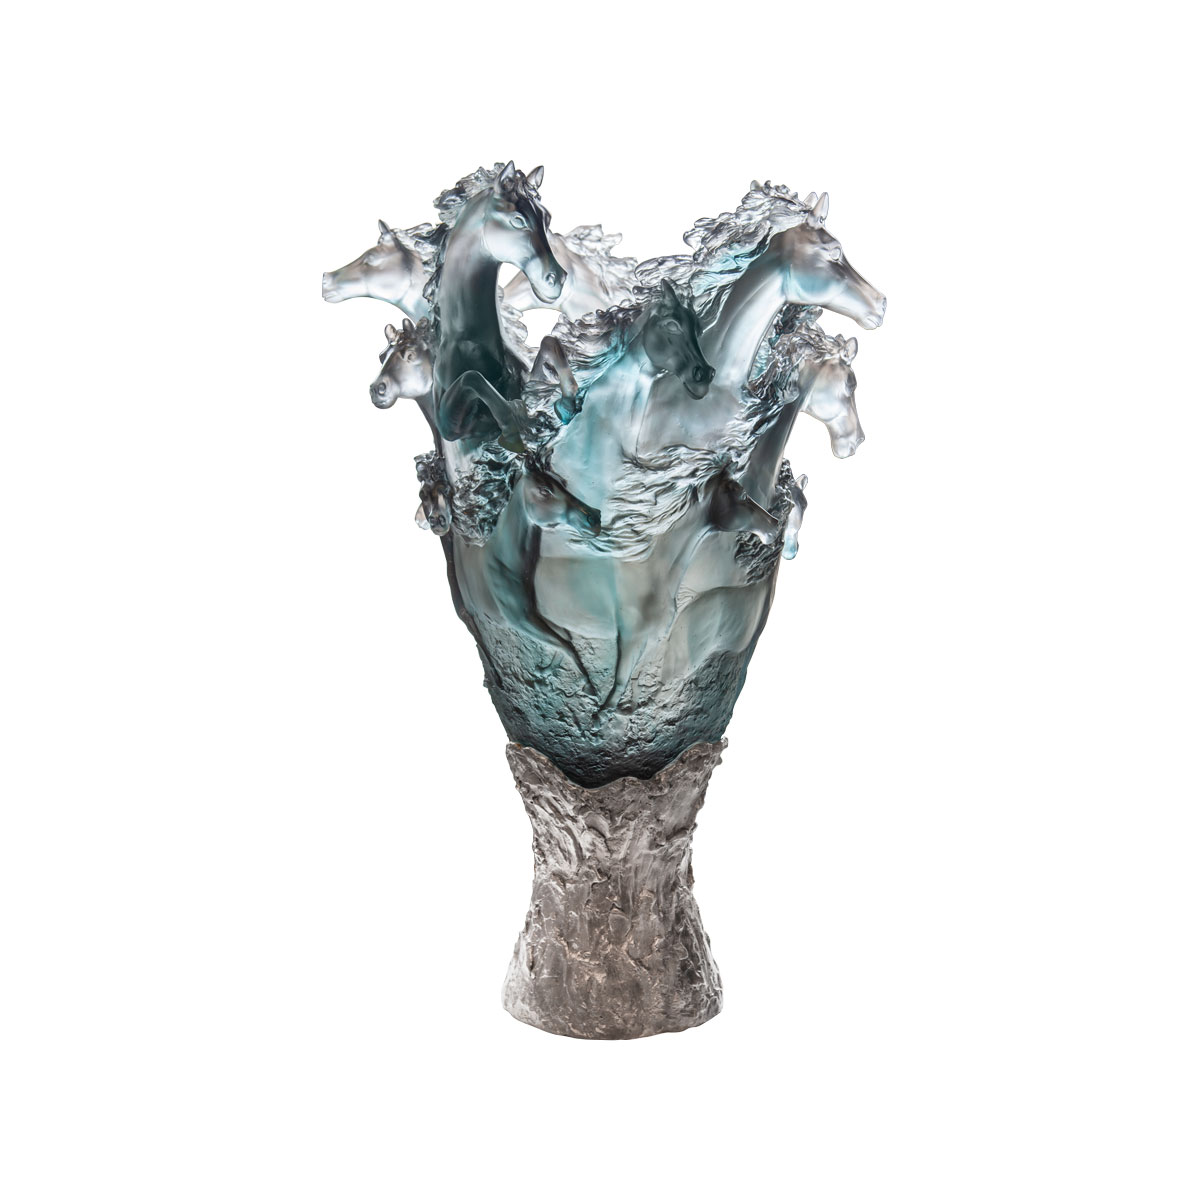 Daum 33.9" Cavalcade Prestige Horse Vase in Blue and Grey, Limited Edition